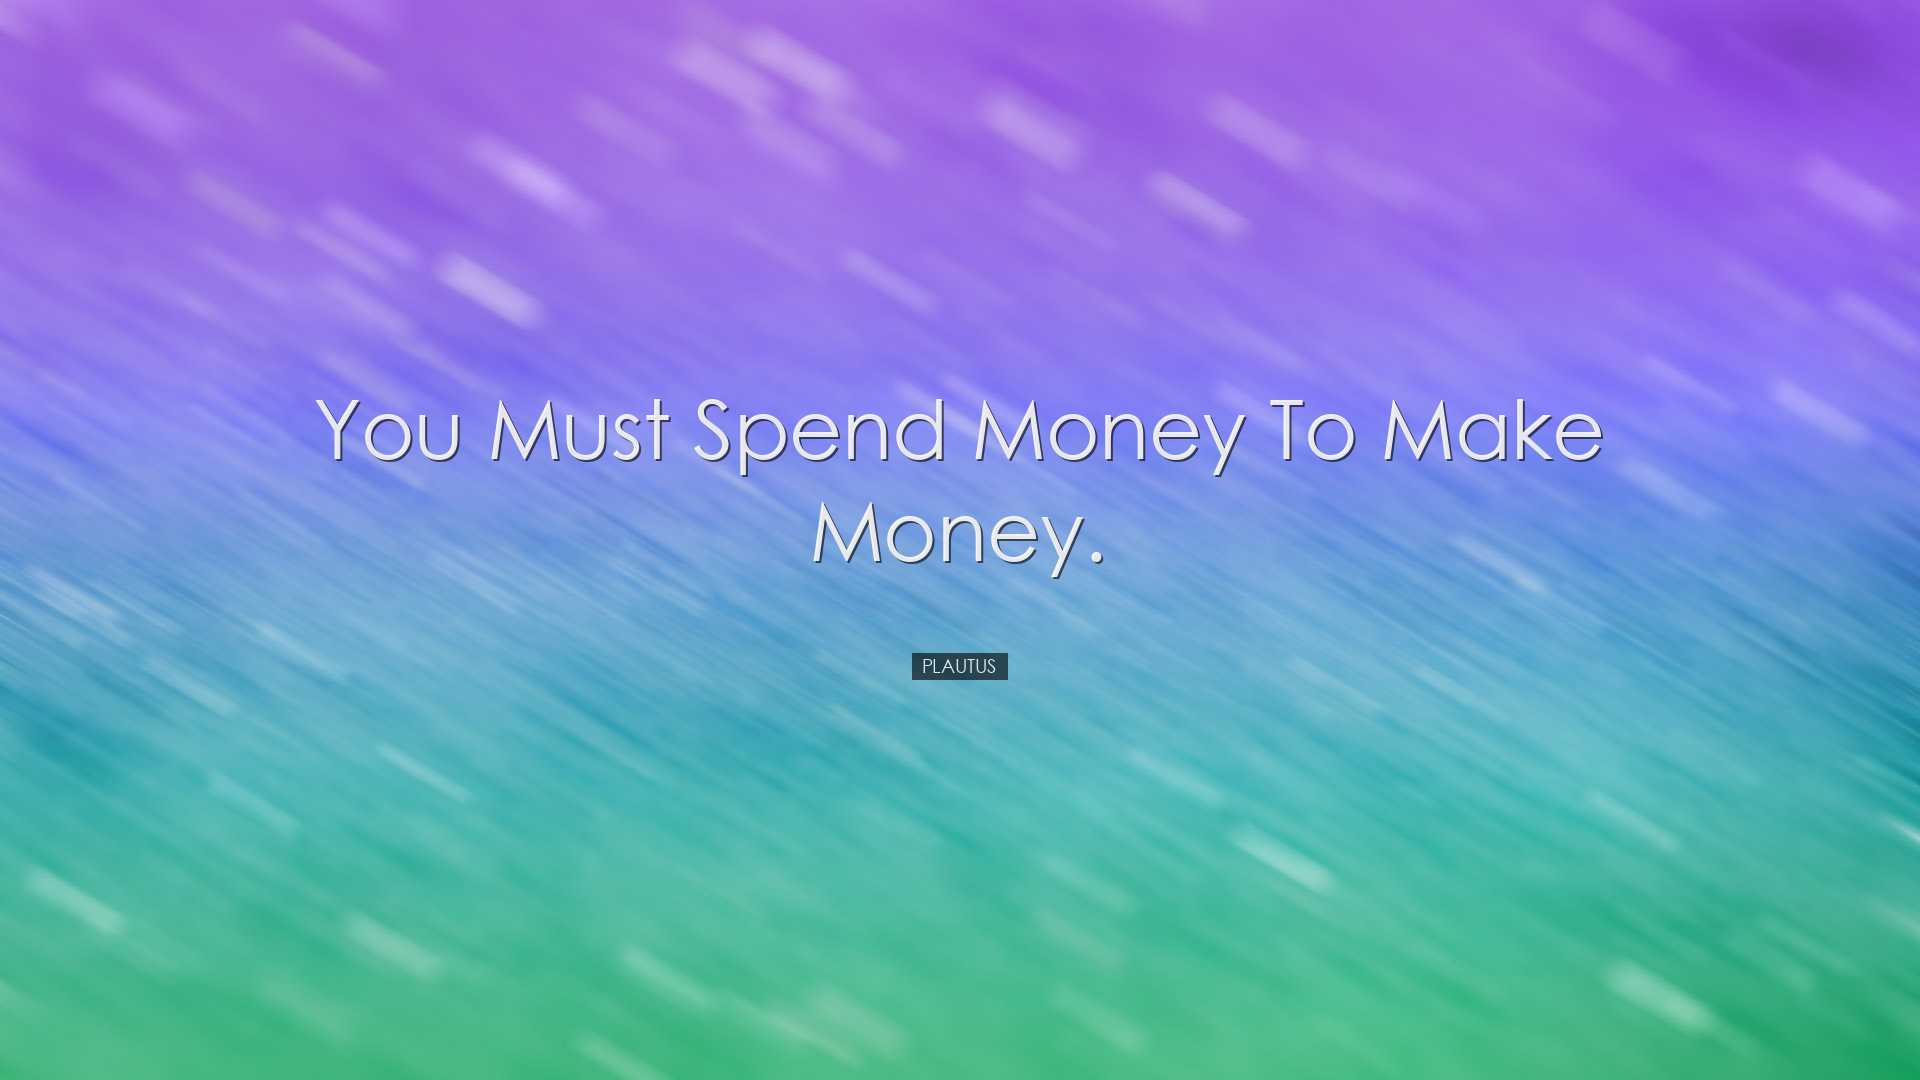 You must spend money to make money. - Plautus